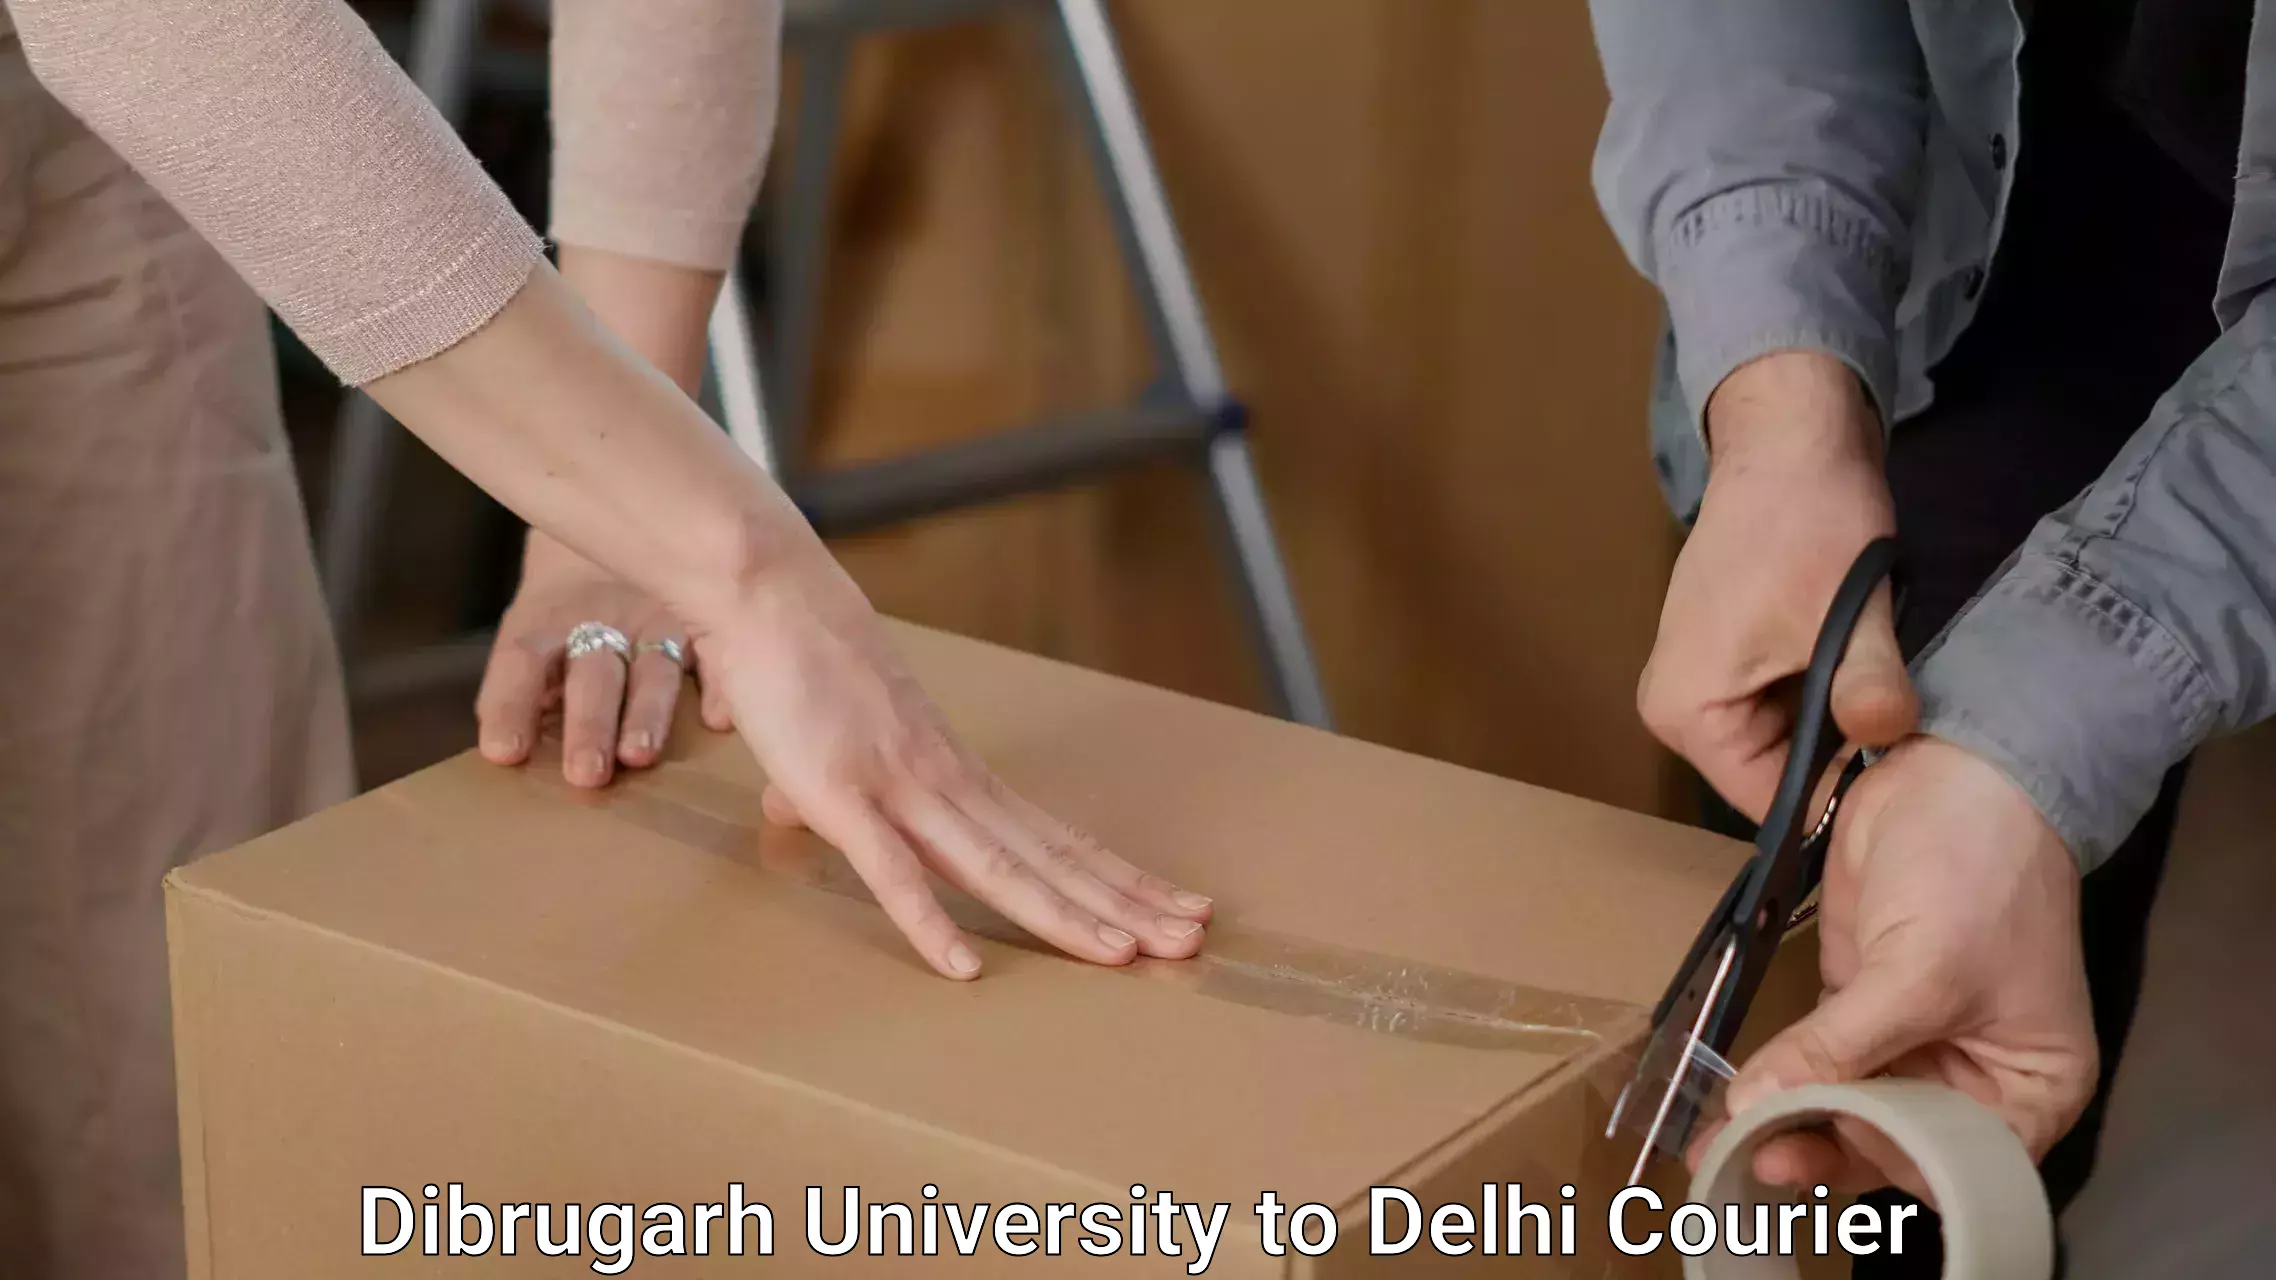 Furniture moving experts Dibrugarh University to Lodhi Road